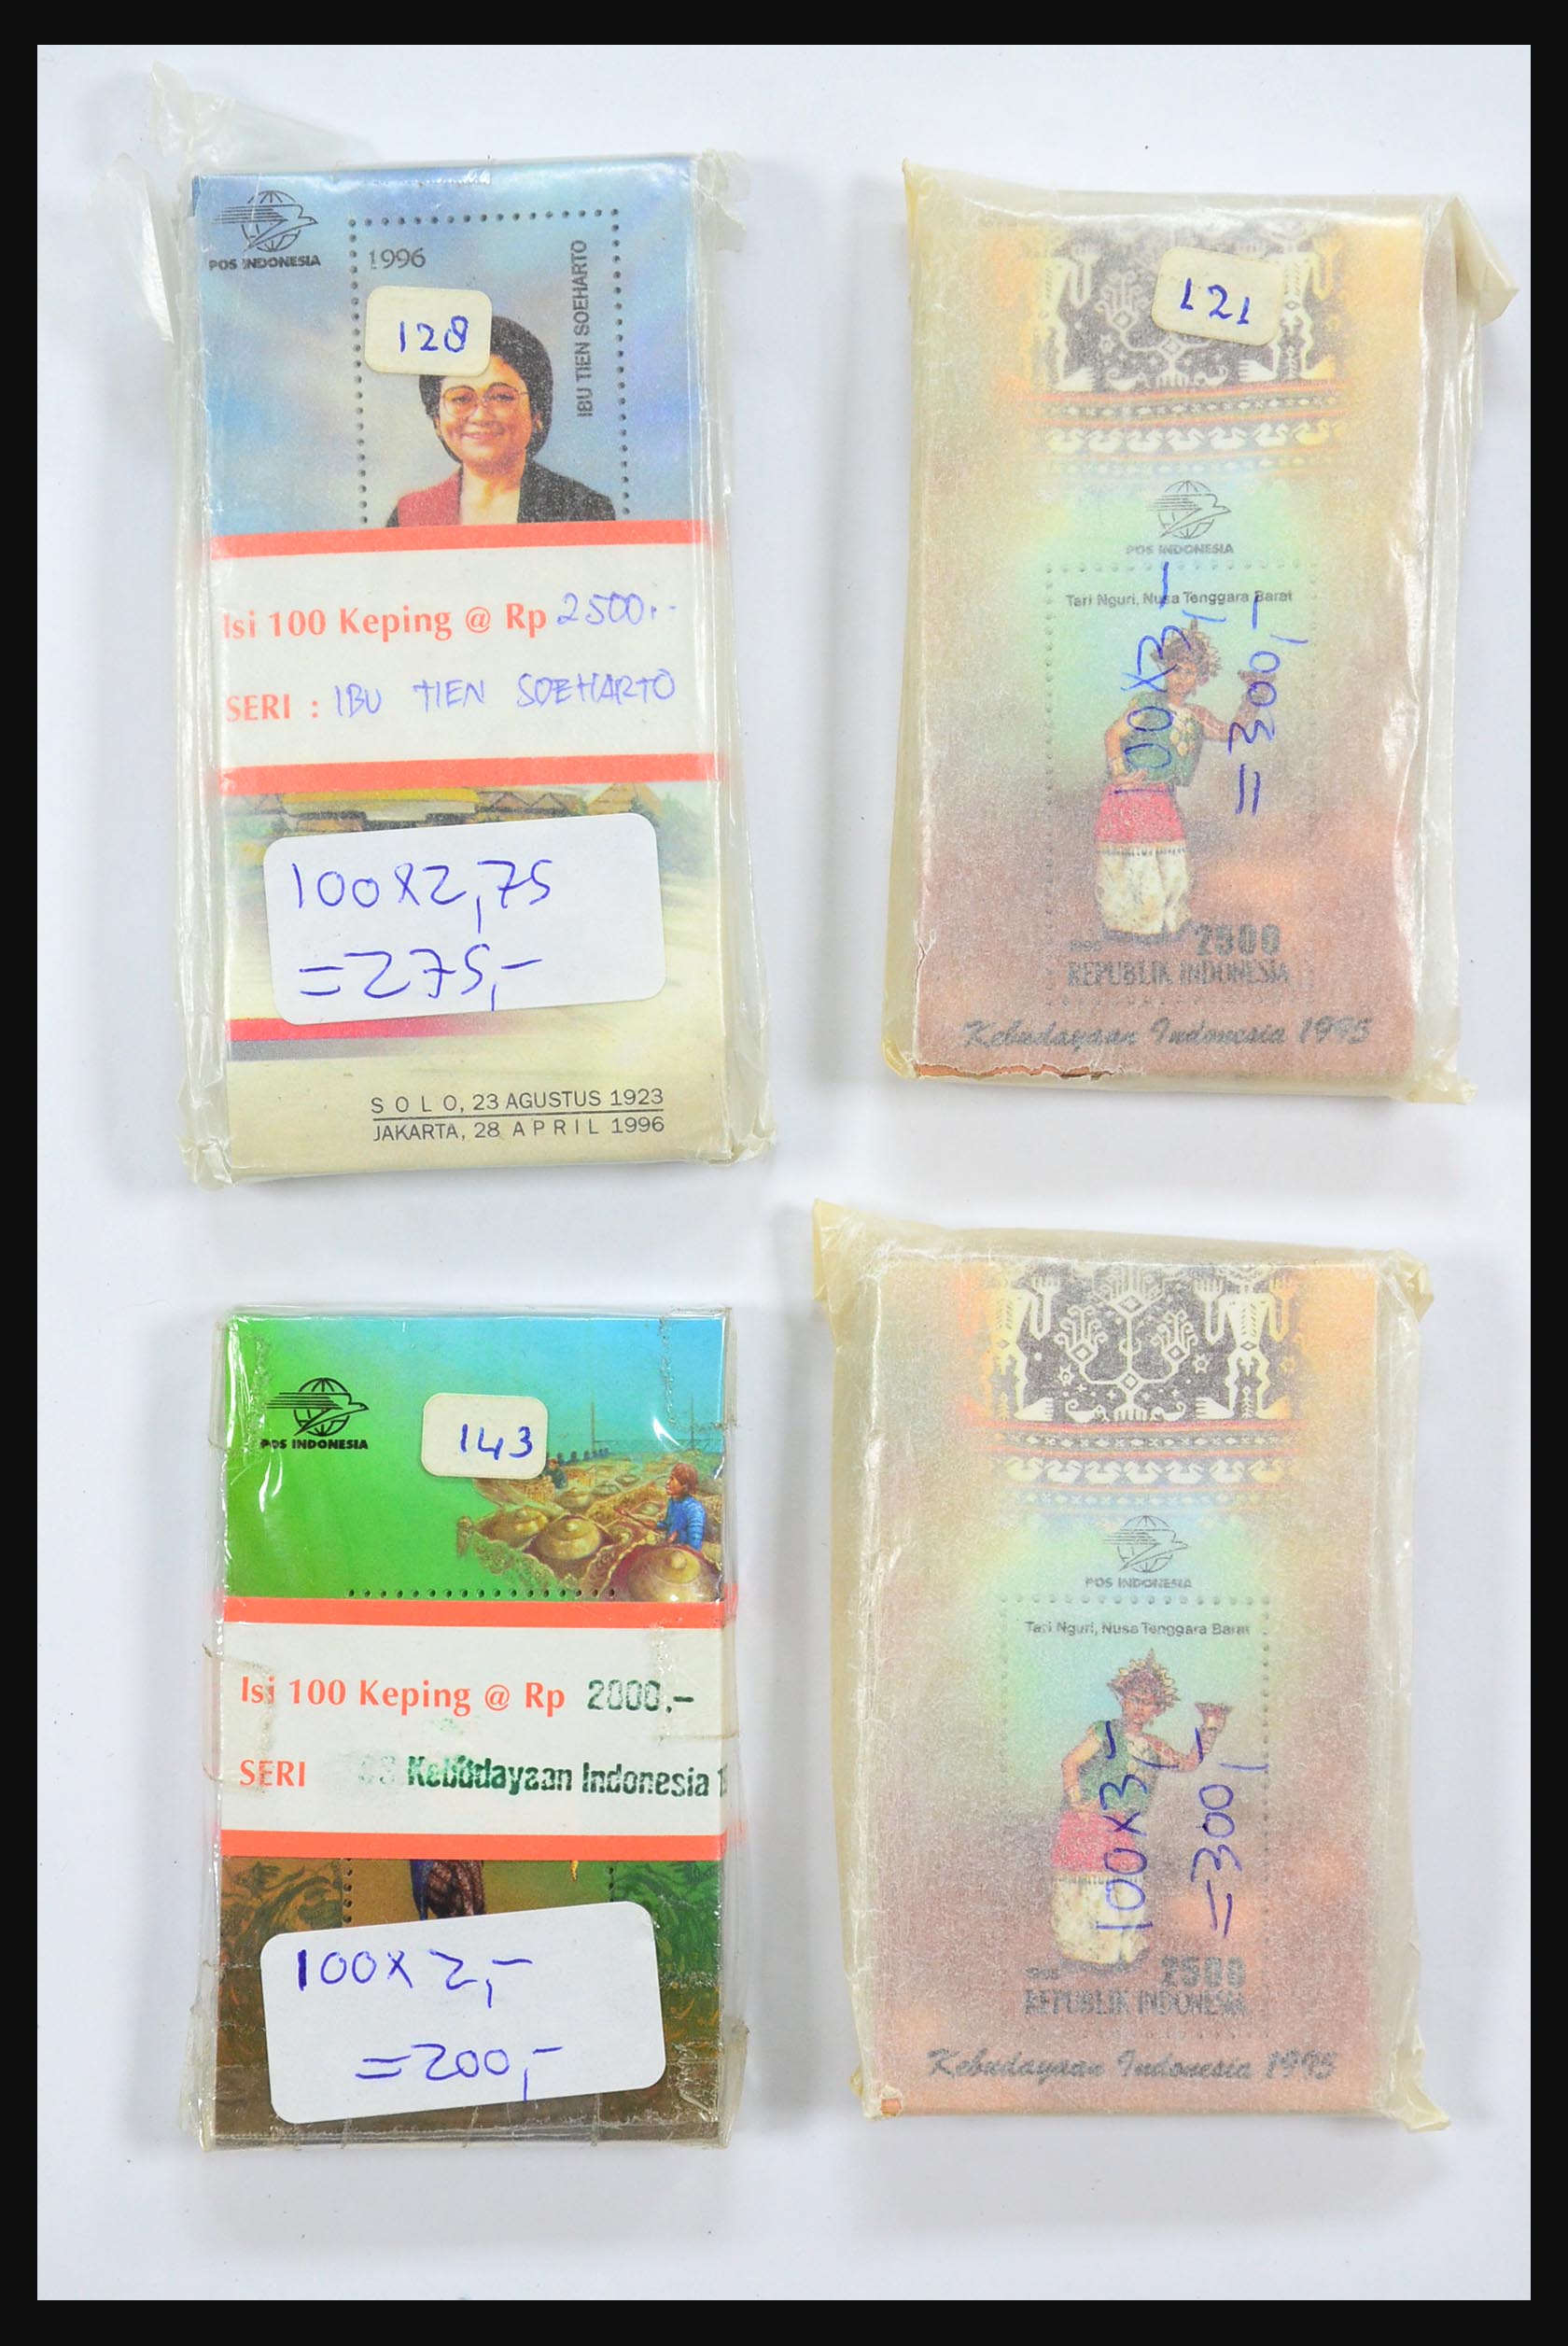 31447 002 - 31447 Indonesia souvenir sheets 1995-1998.